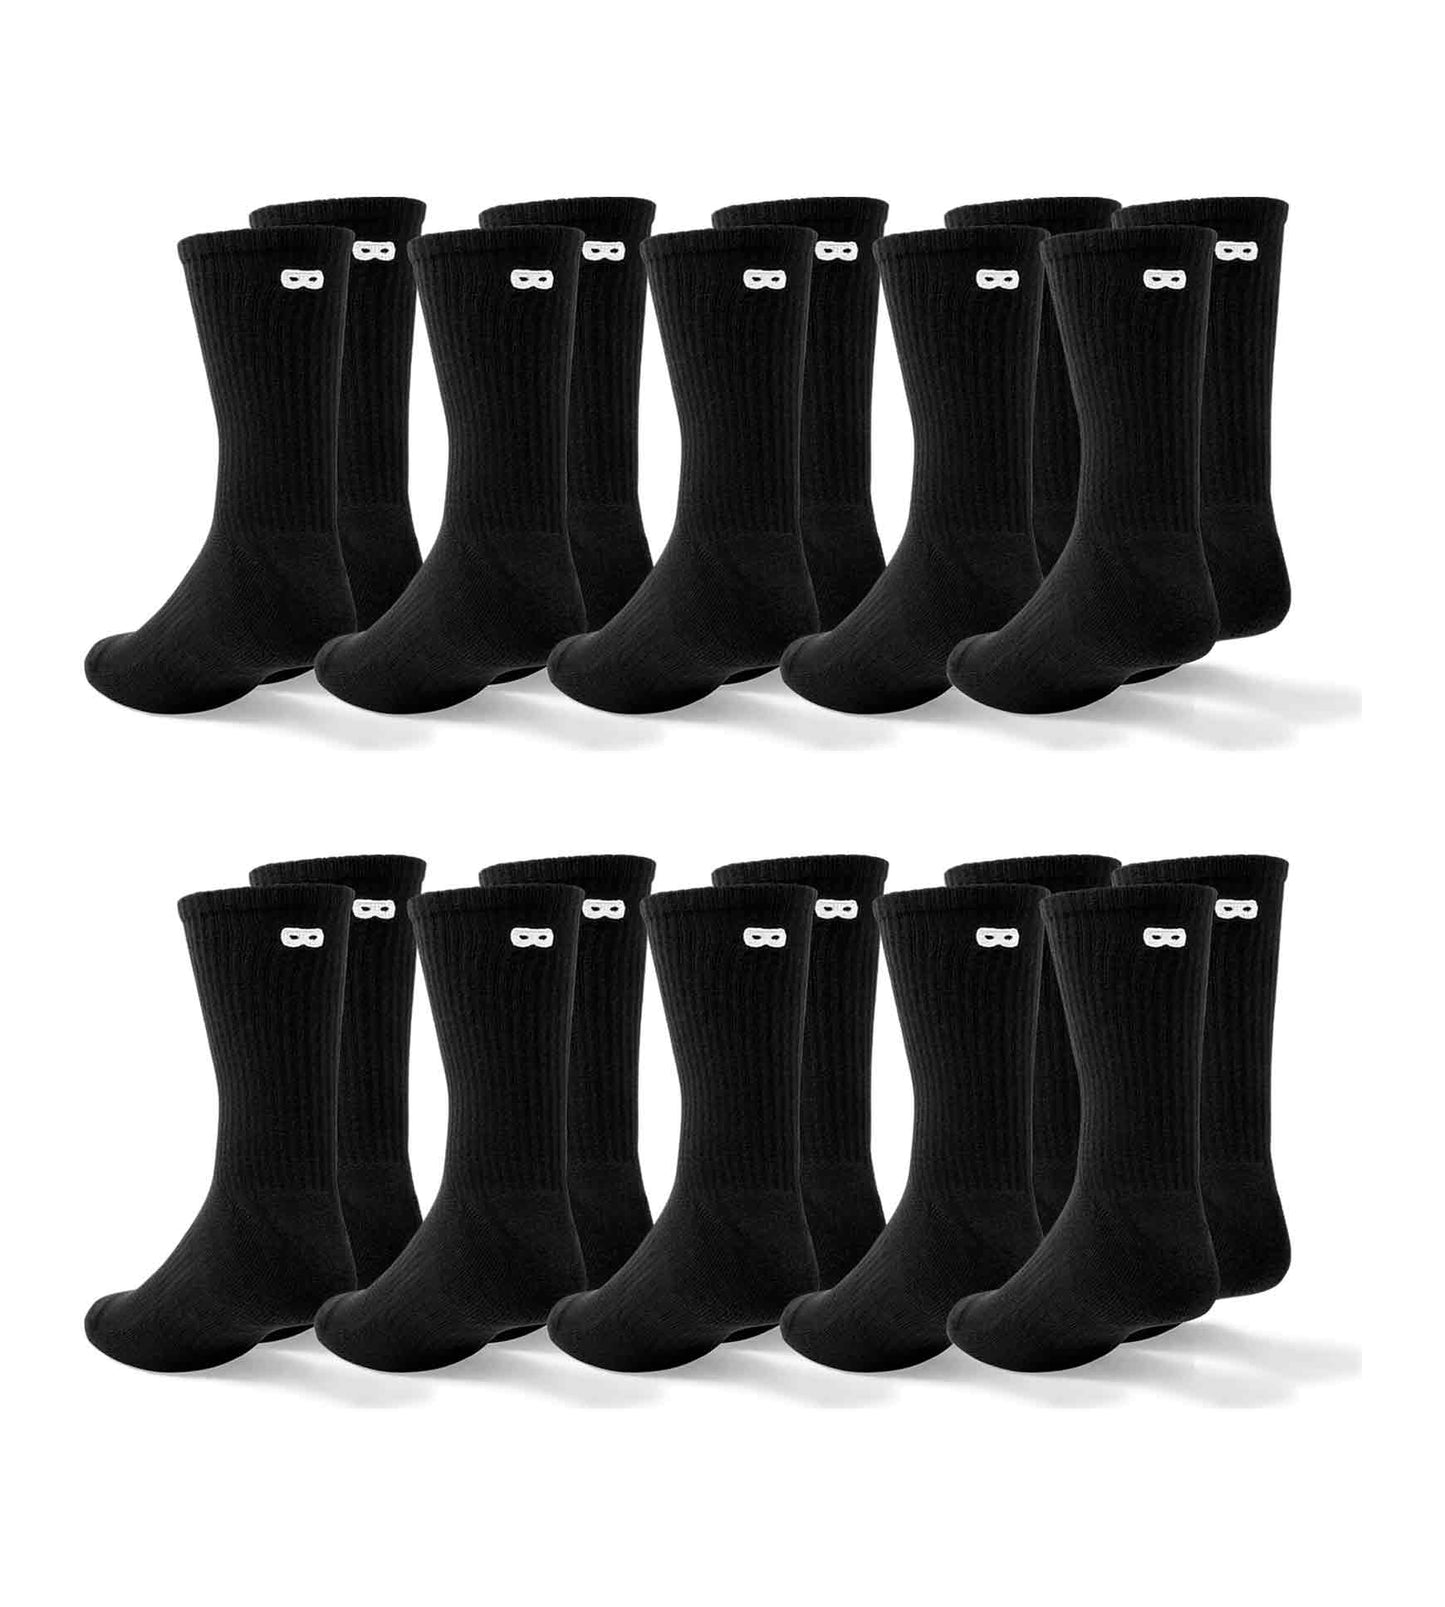 Cushion Crew Socks 10 Pack colors contain: Black, Dark Gray, Dark slate gray, Gains boro, Black, Dim gray, Silver, Dark slate gray, Black